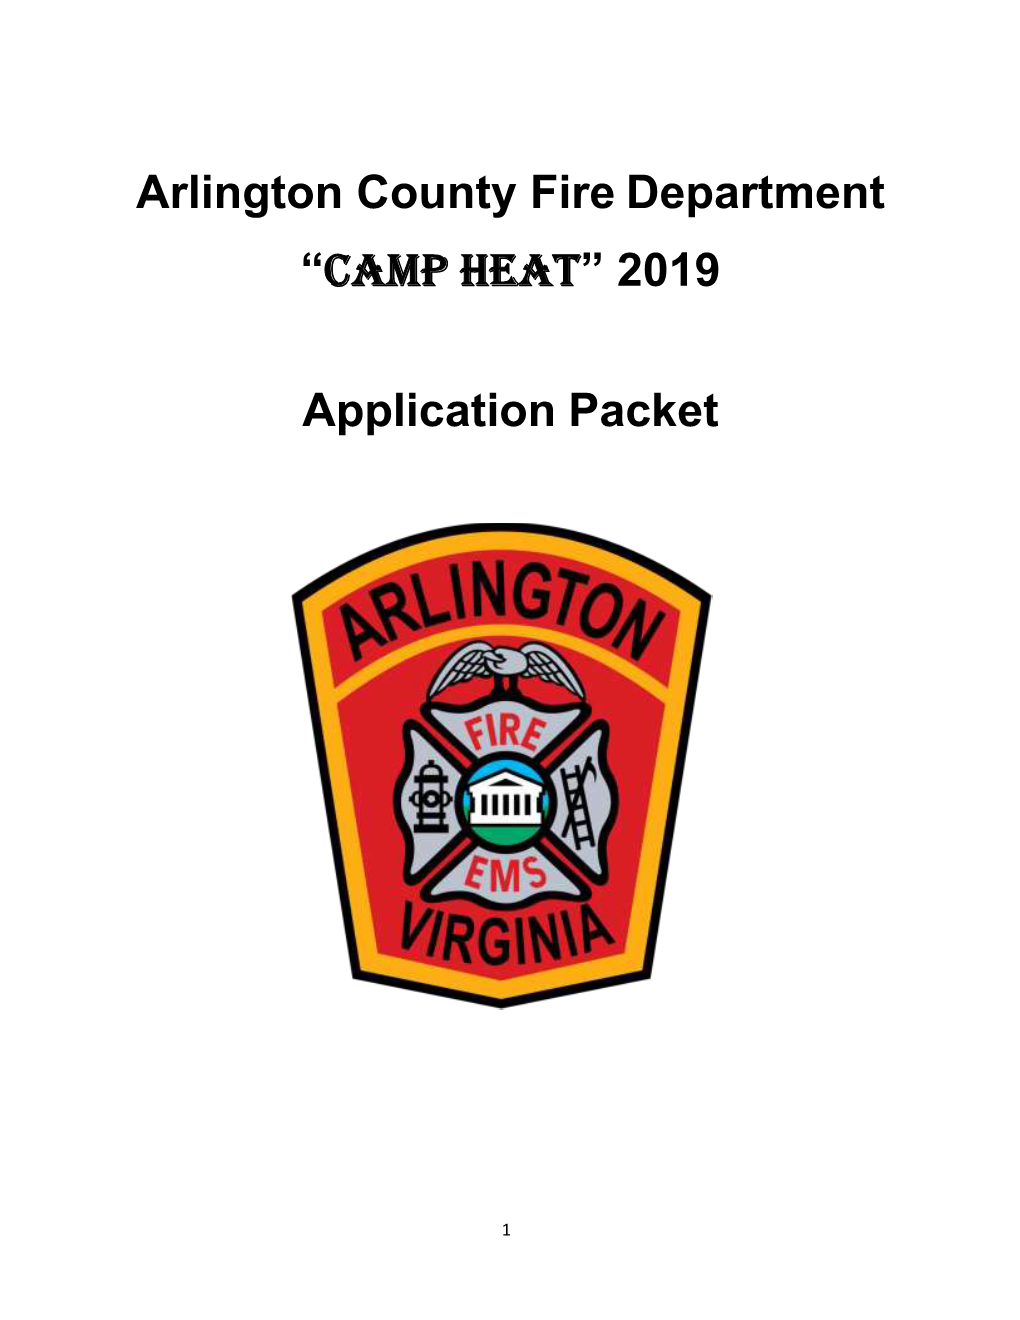 Arlington County Fire Department “Camp Heat” 2019